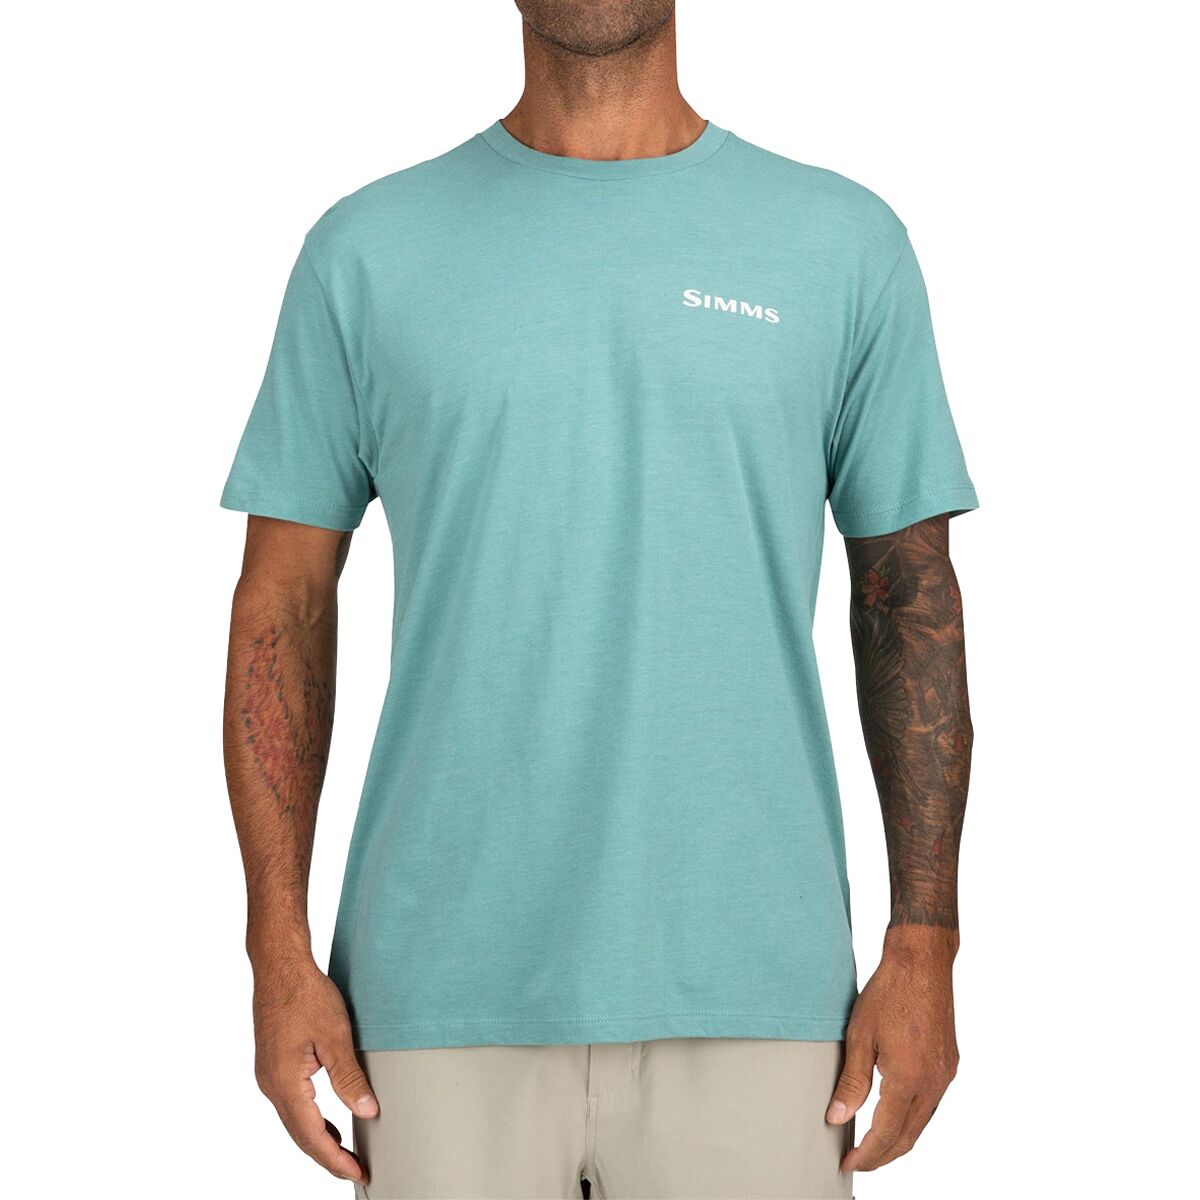 Simms Walleye Outline T-Shirt - Men's